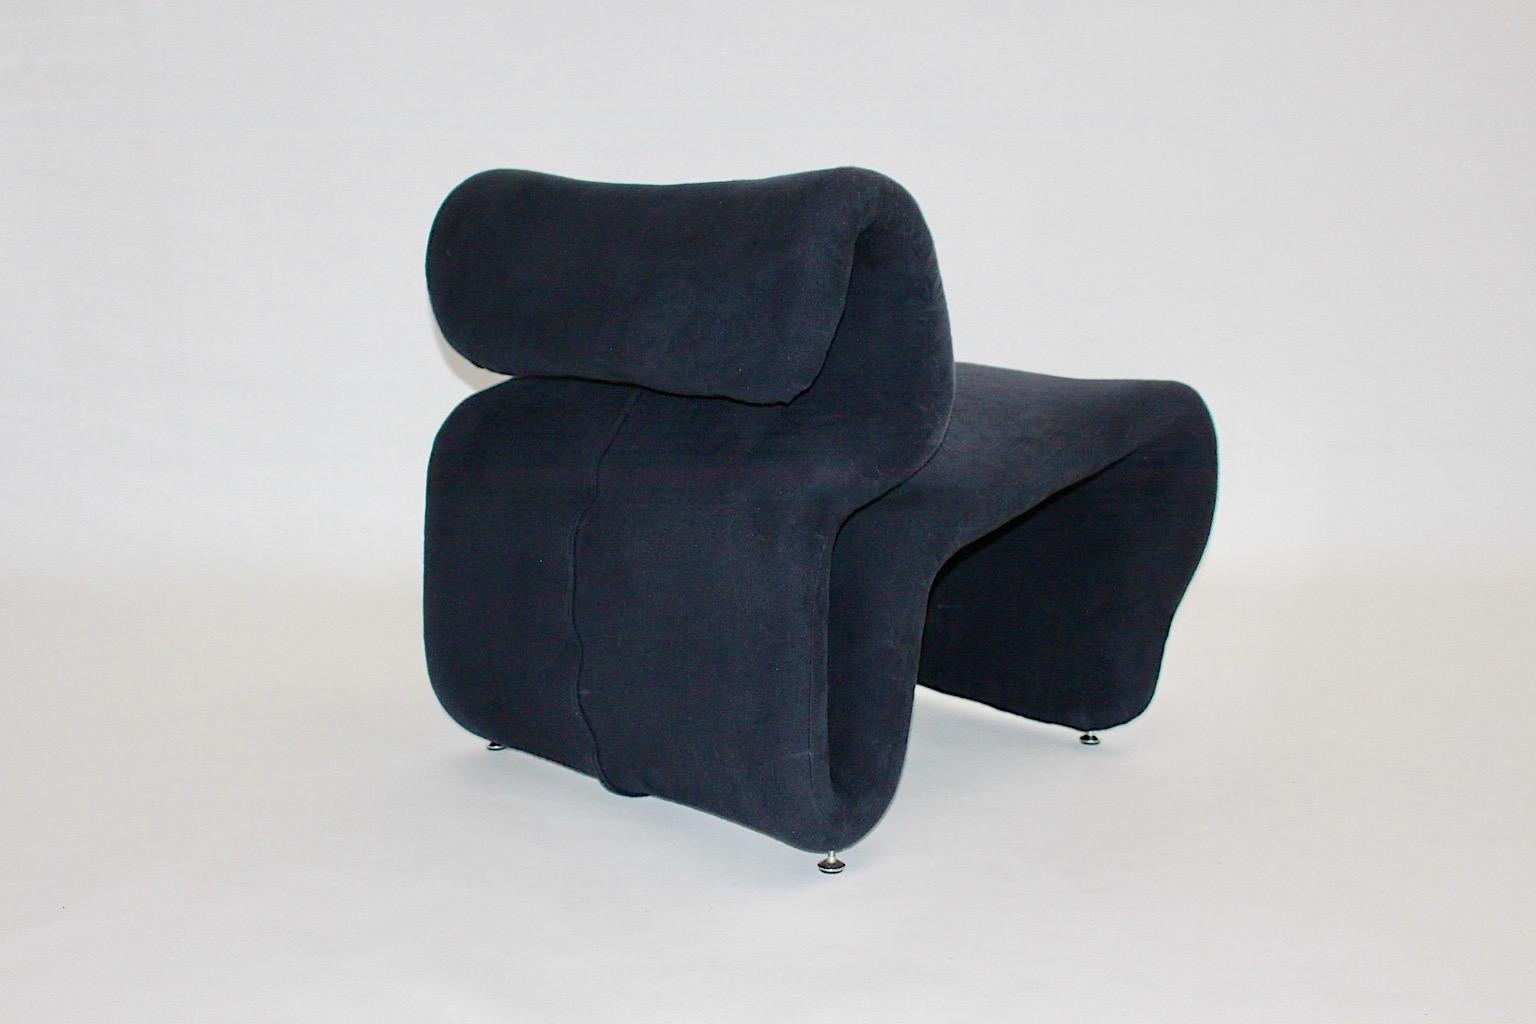 Sculptural Space Age Vintage Blue Lounge Chair Etcetera Jan Ekselius, 1970s For Sale 4